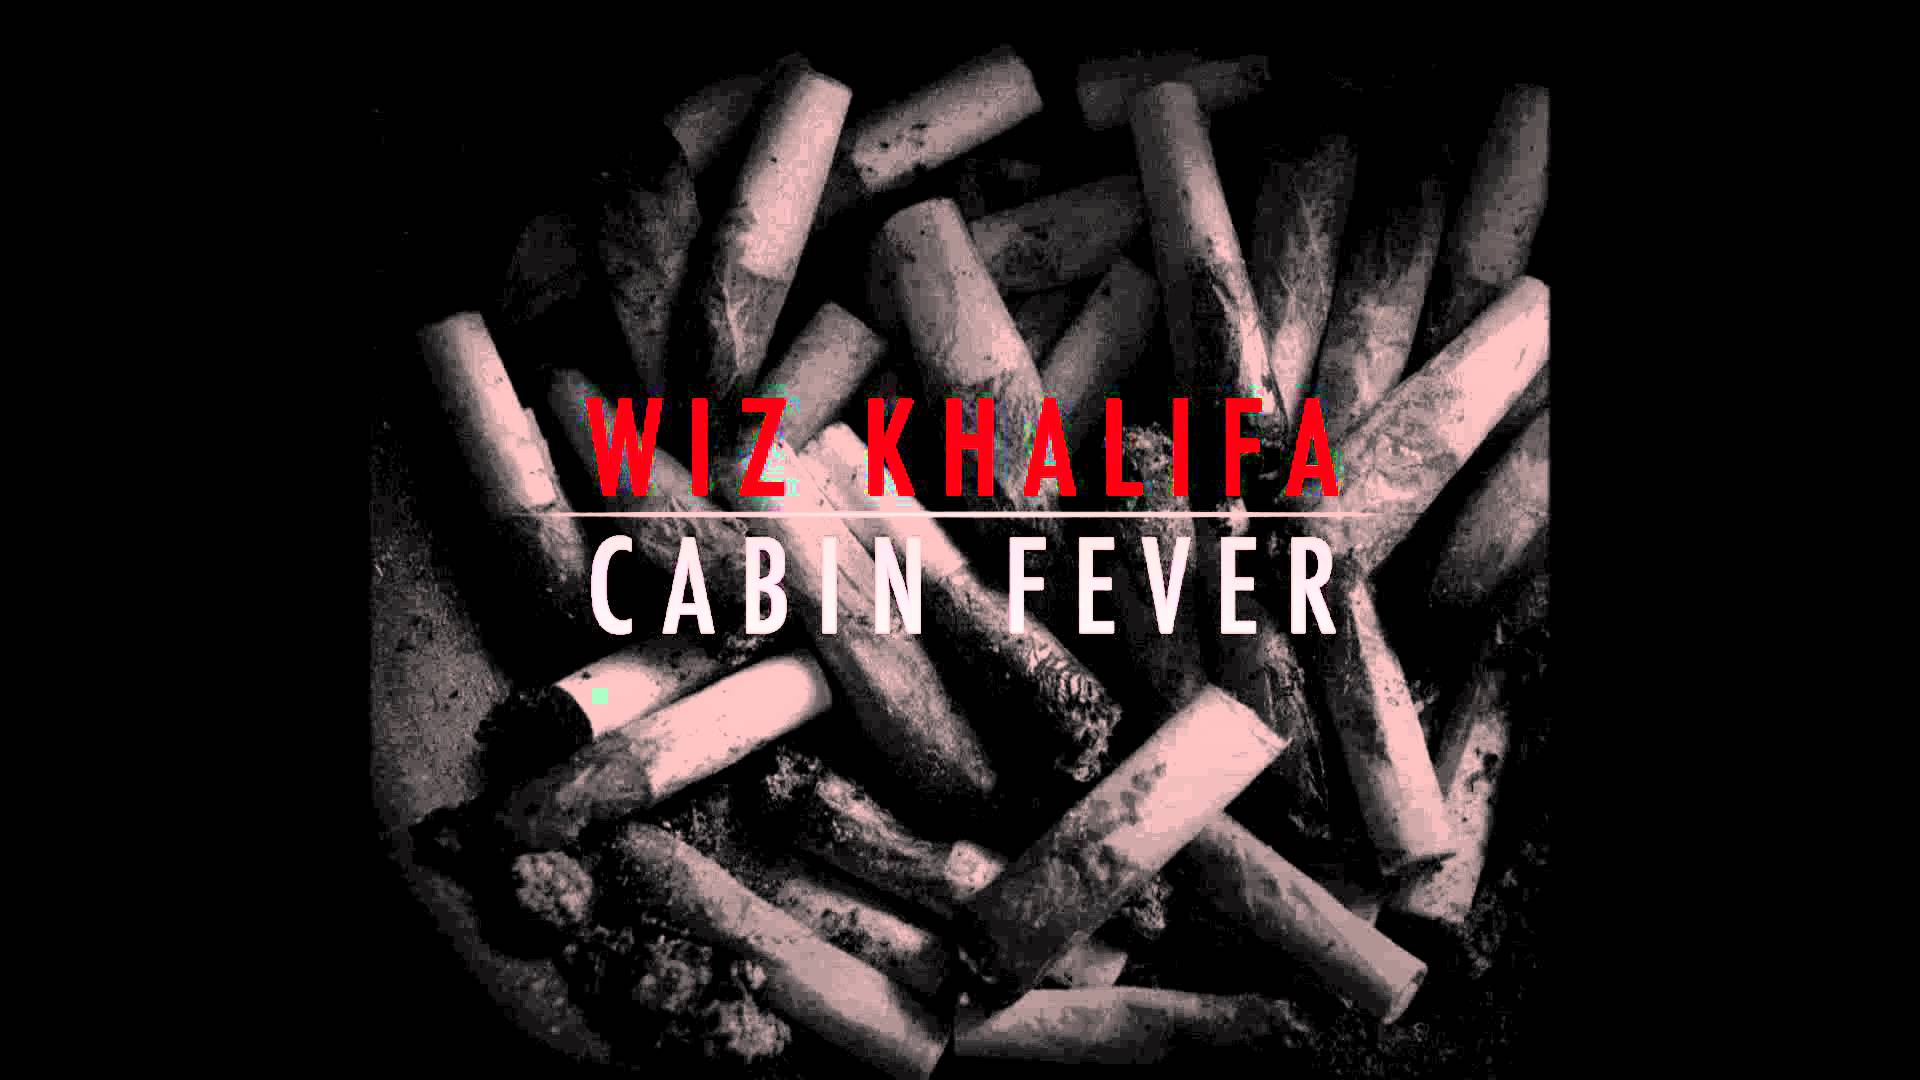 Wiz Khalifa - Taylor Gang [CDQ Version] - YouTube